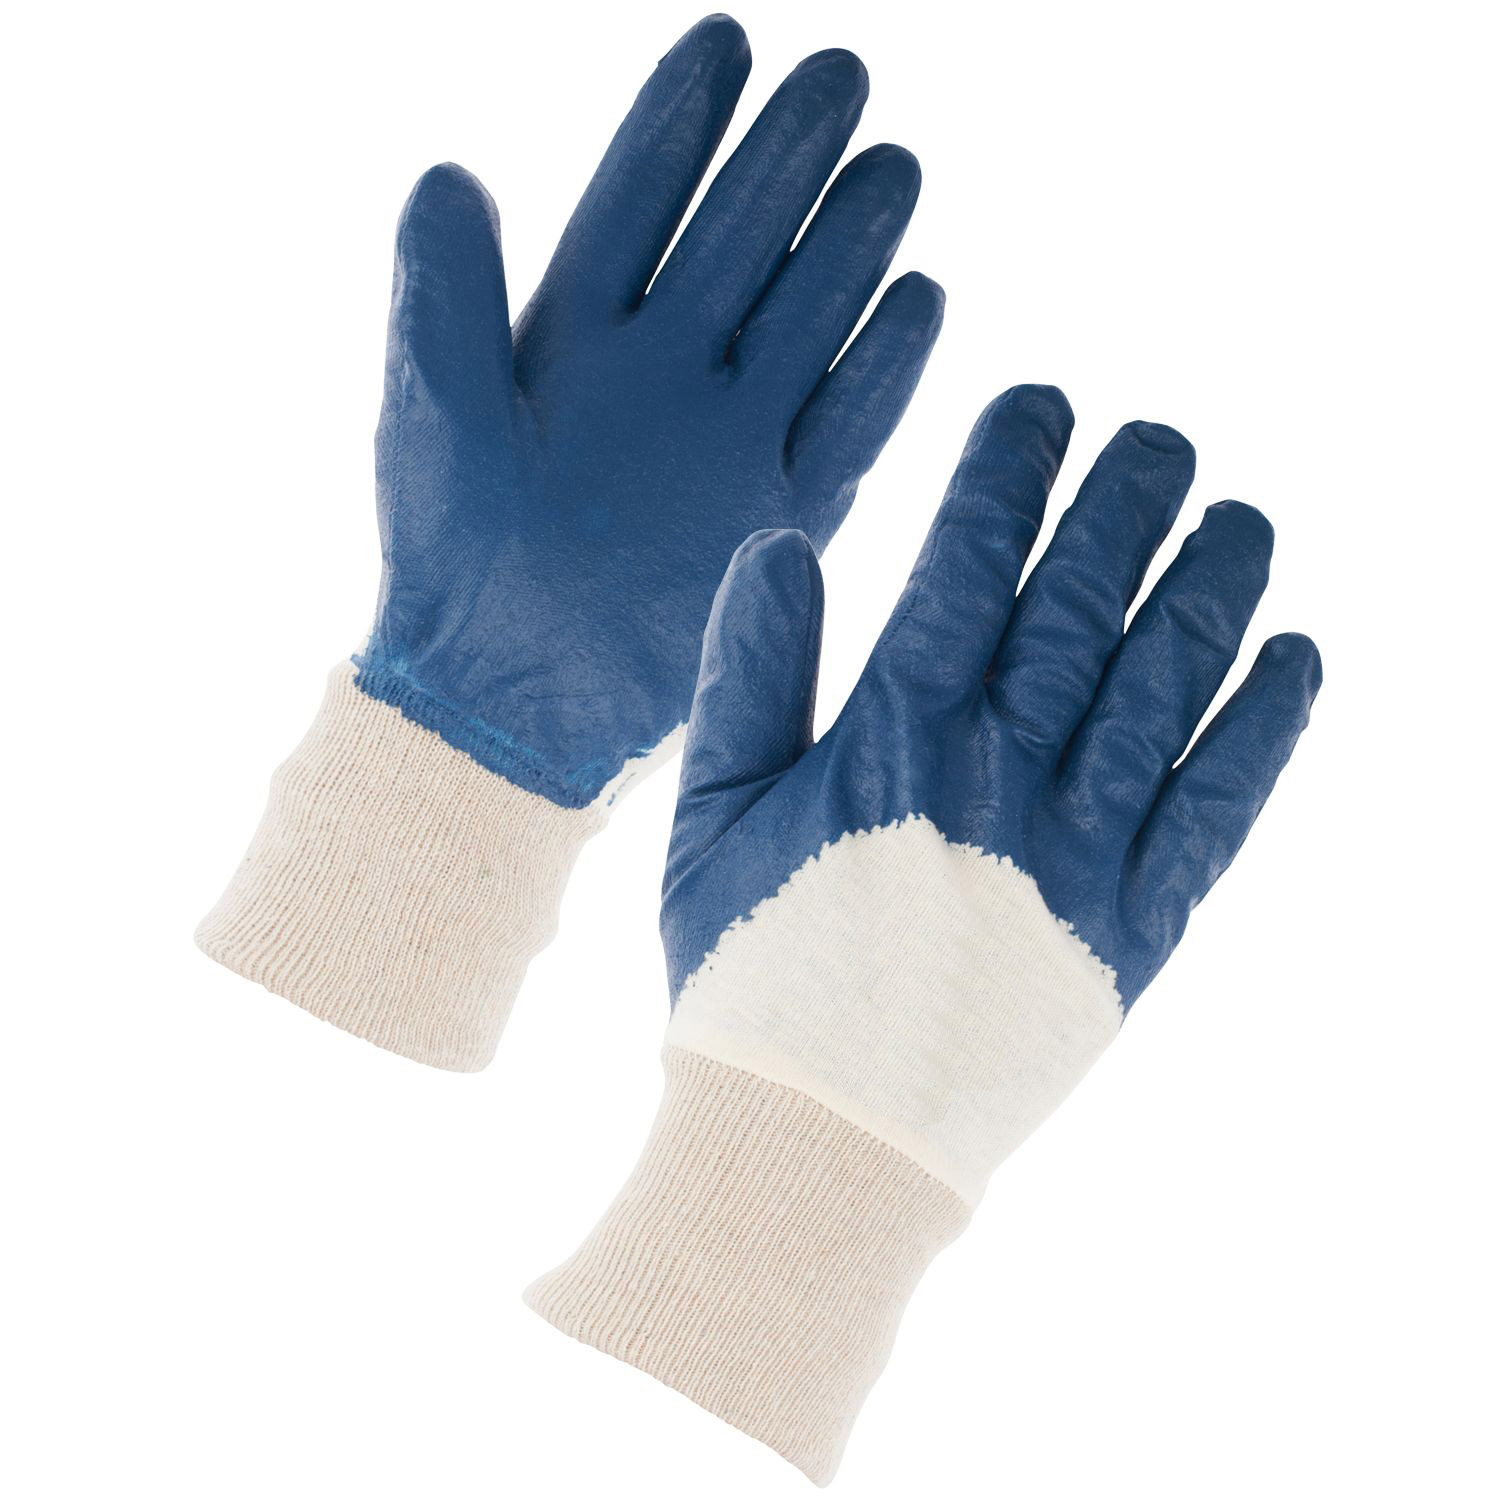 Nitrile Lightweight Breathable Palm Dip Knit Wrist Gloves